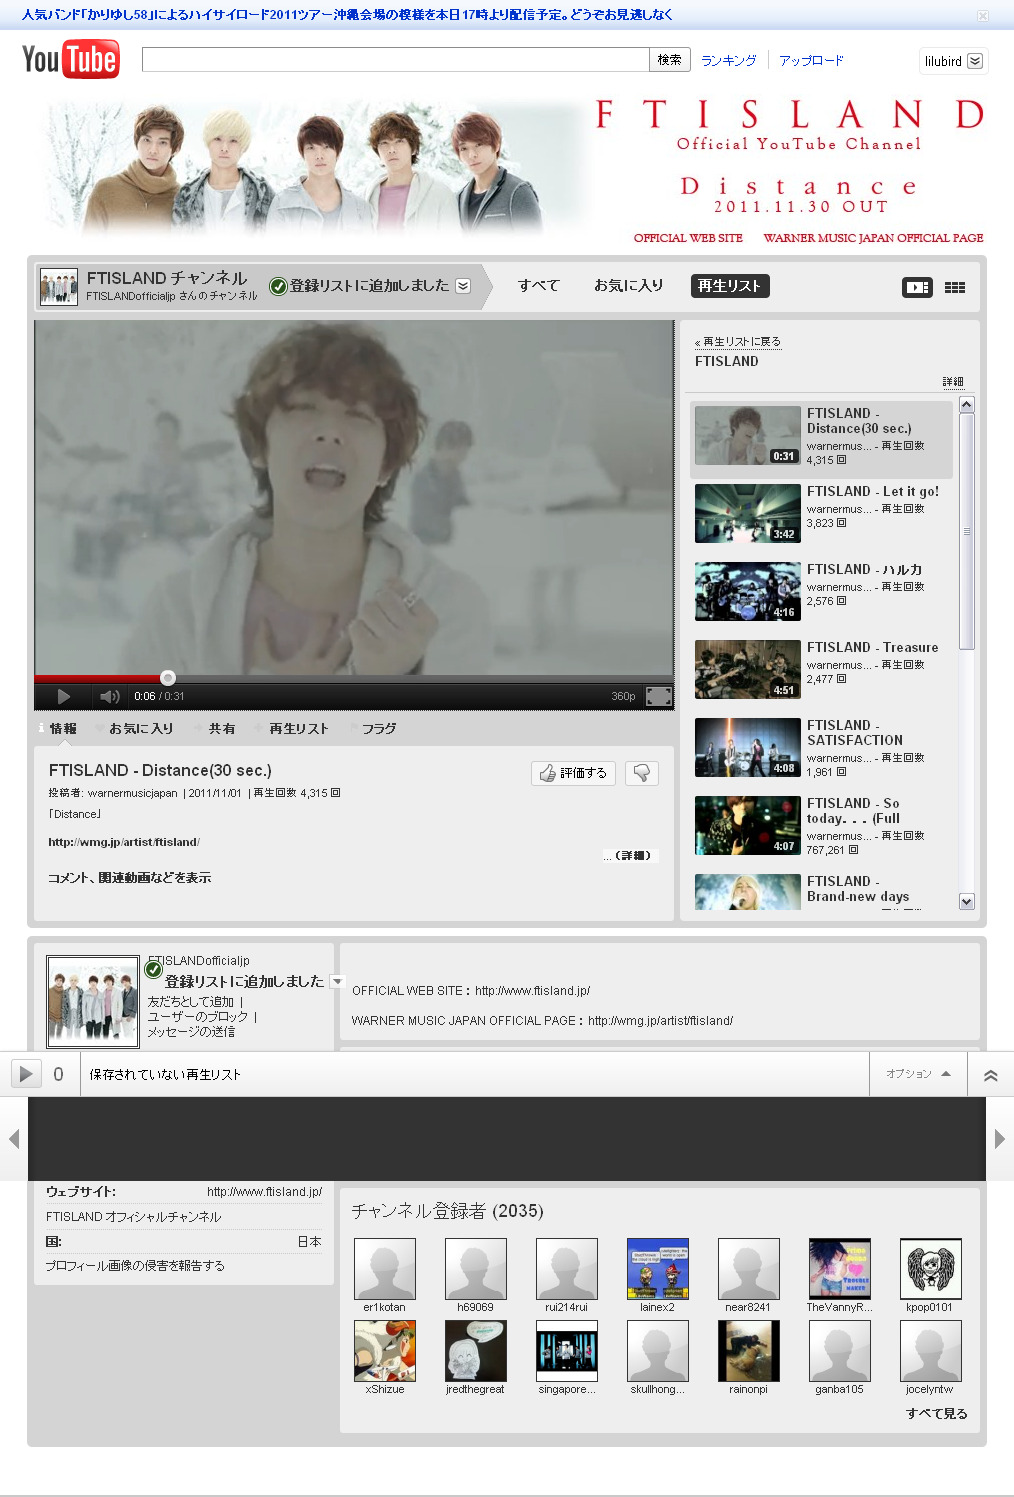 FTISLAND Japan Official YouTube Channel